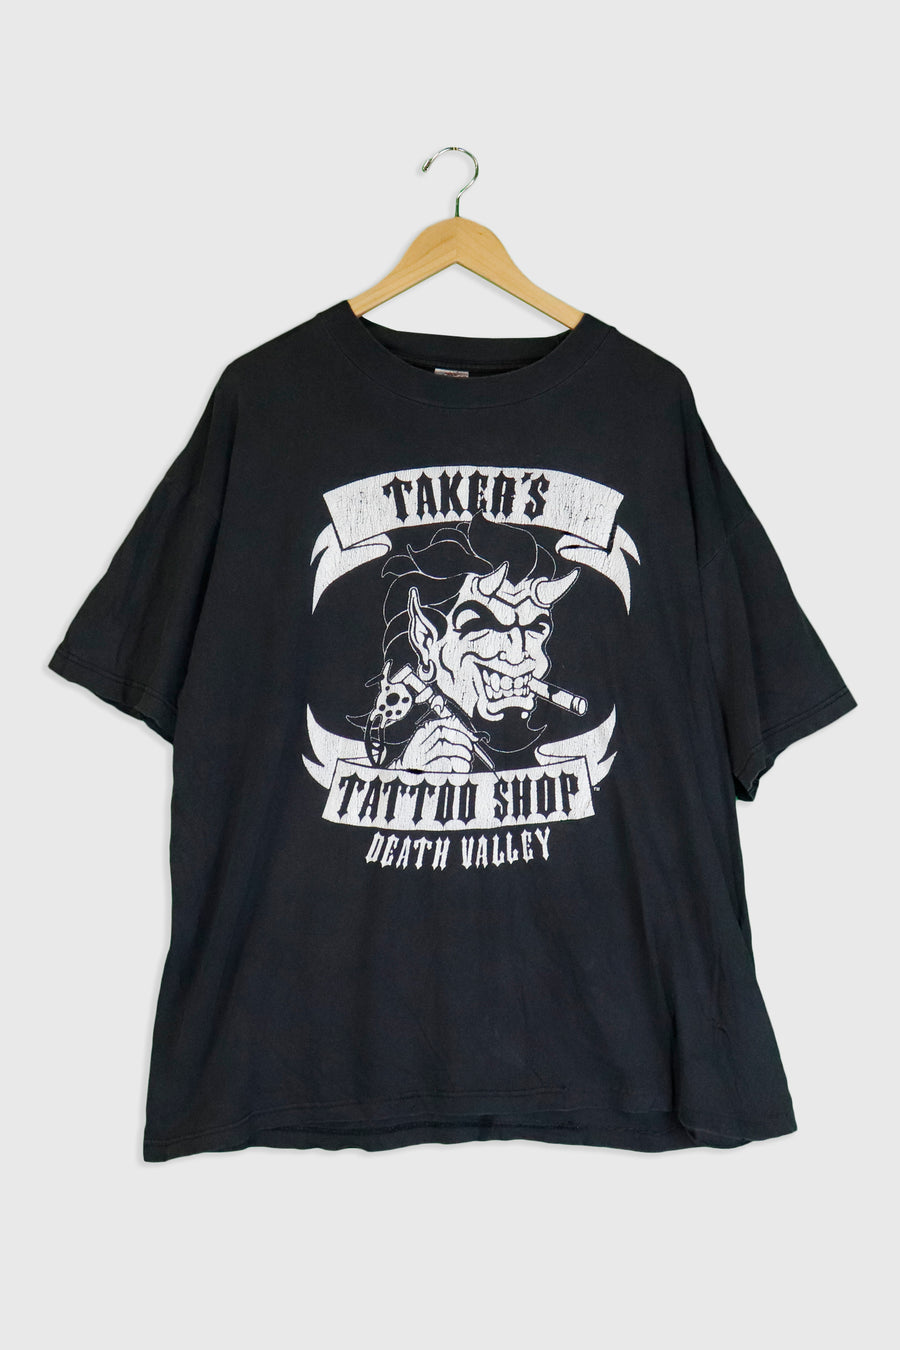 Vintage 1998 WWF Tankers Tattoo Shop Death Valley T Shirt Sz XL